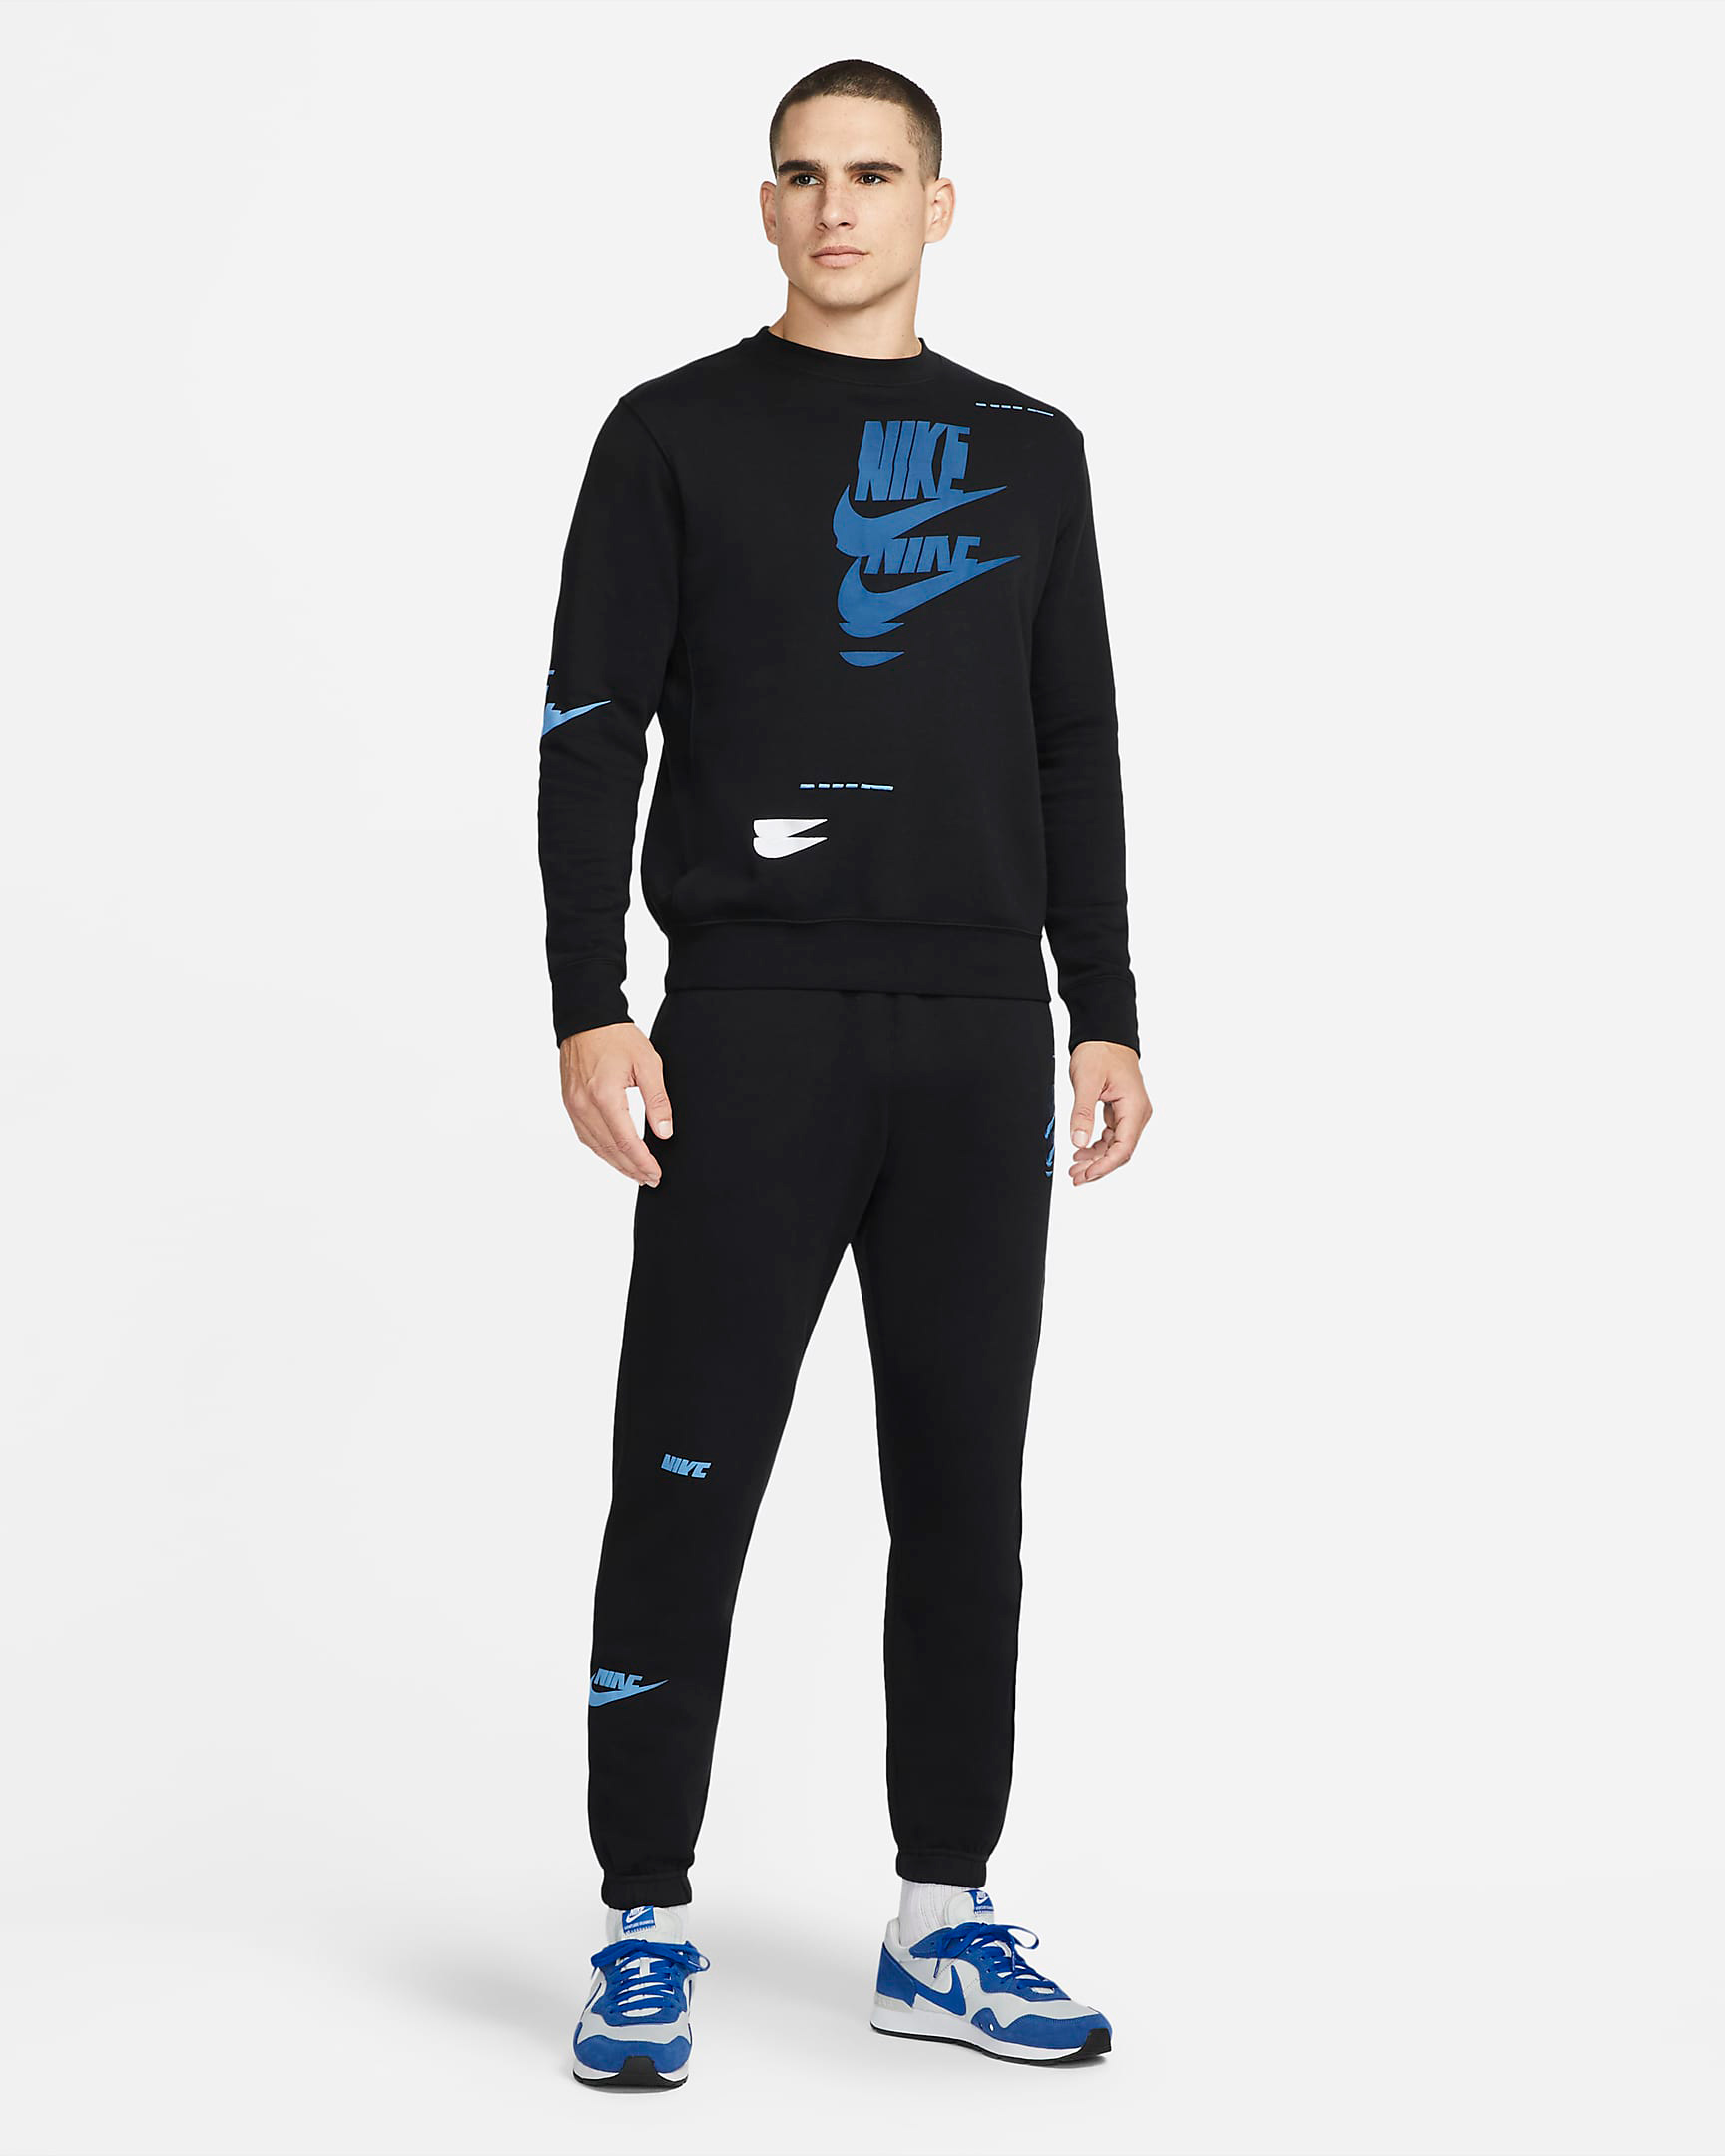 nike-black-dark-marina-blue-sport-essentials-sweatshirt-pants-outfit